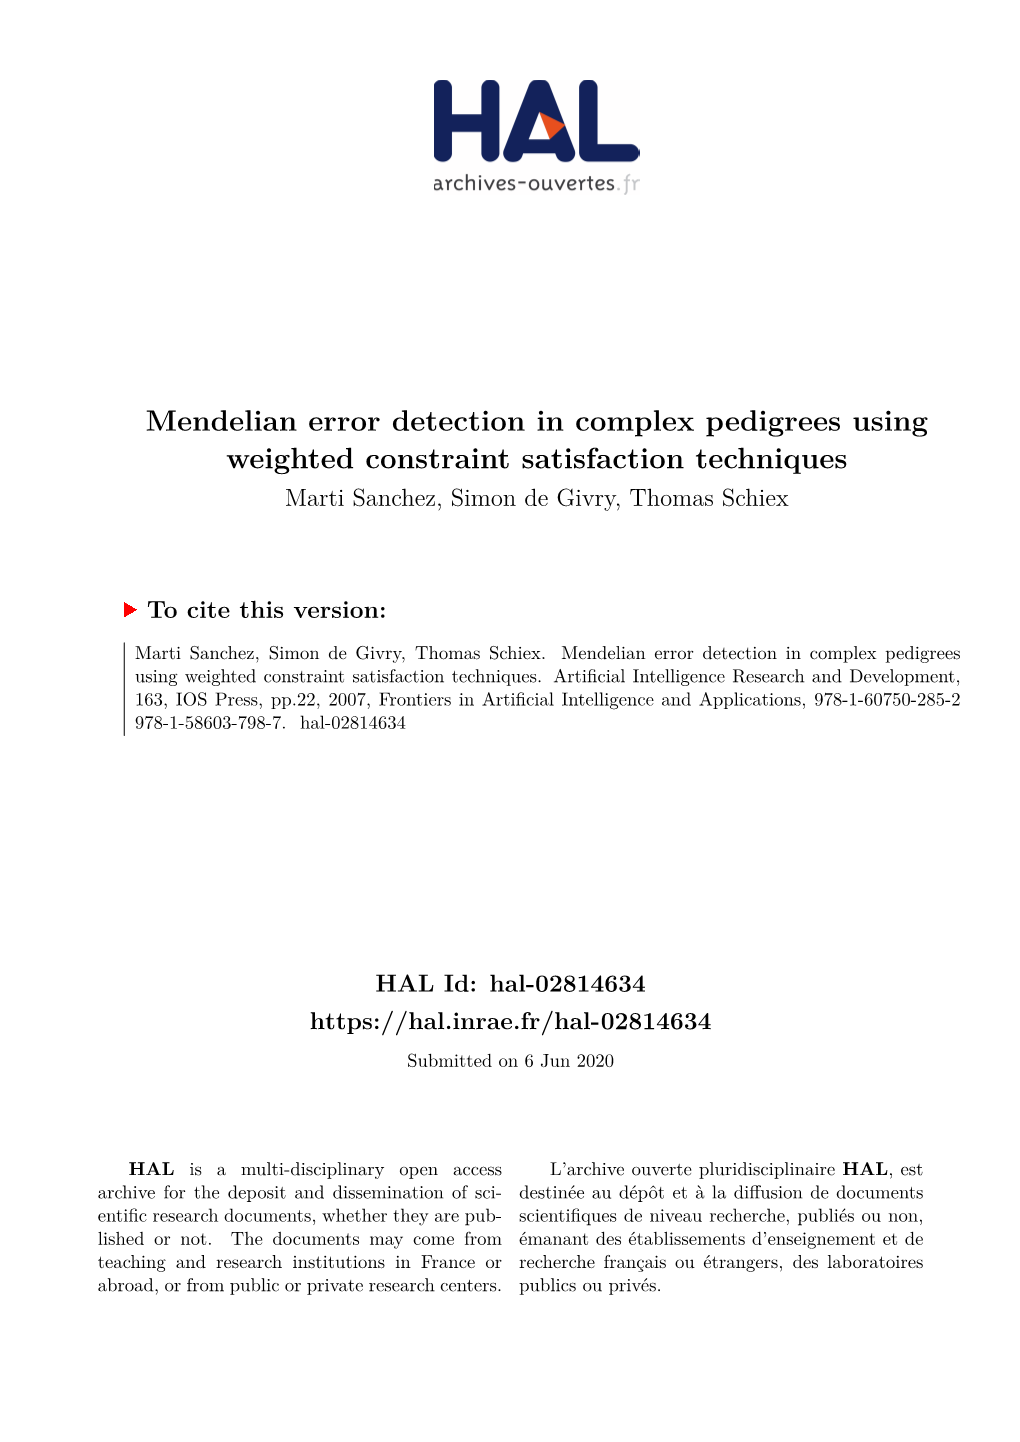 Mendelian Error Detection in Complex Pedigrees Using Weighted Constraint Satisfaction Techniques Marti Sanchez, Simon De Givry, Thomas Schiex